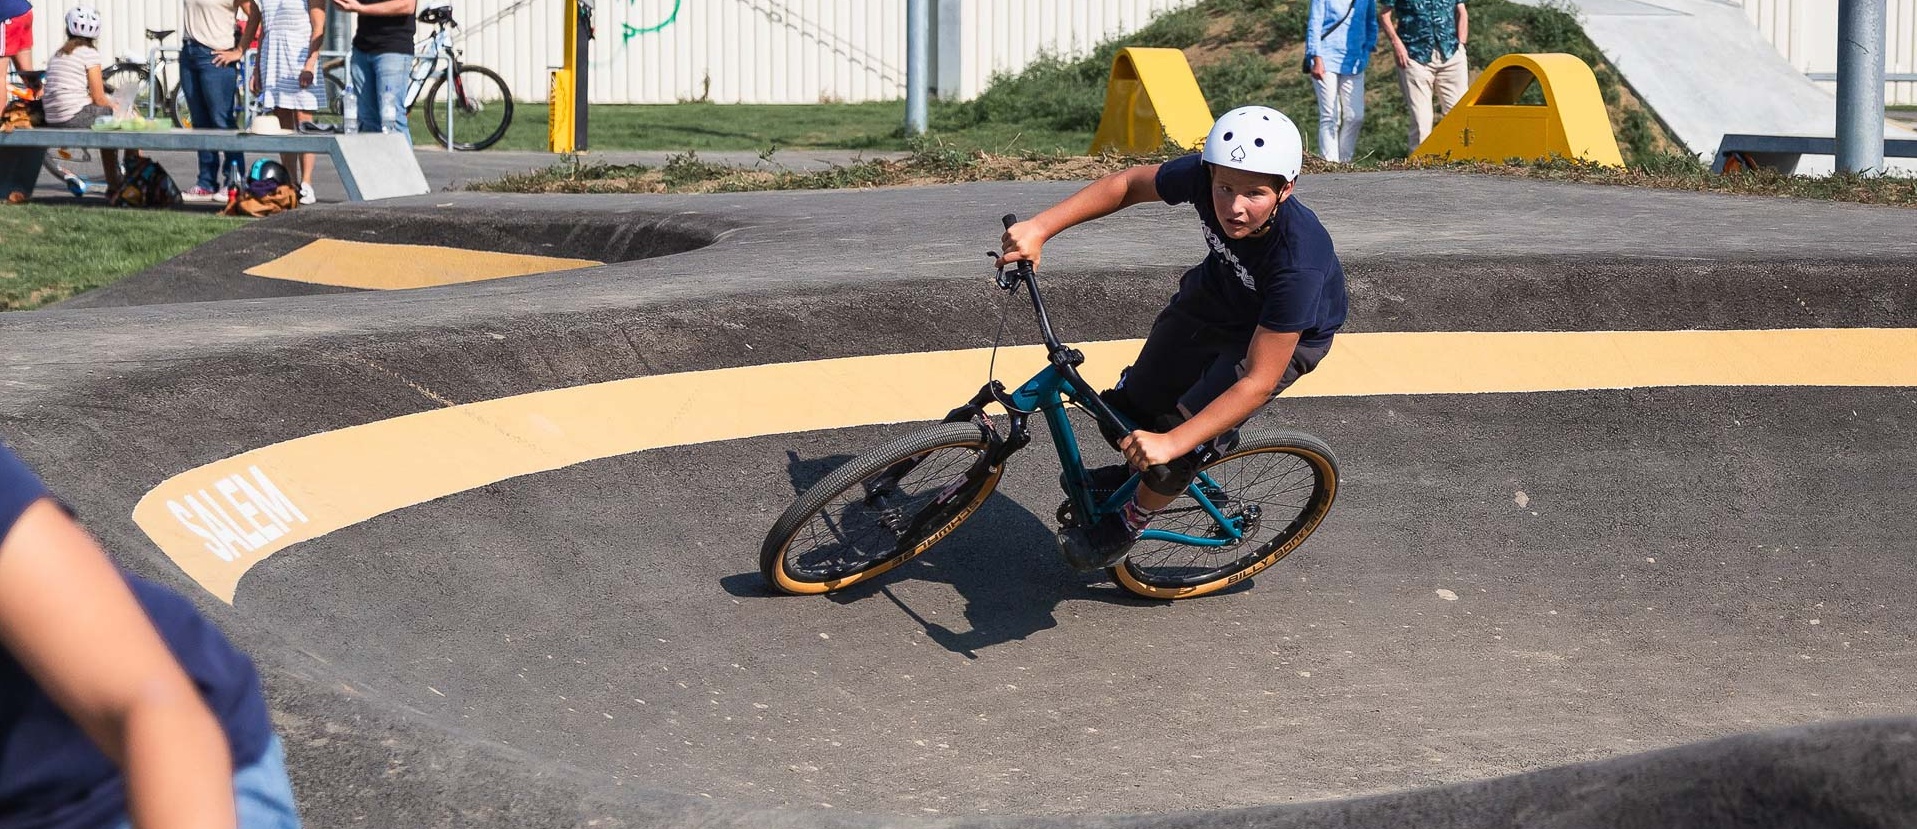 Boy rides dirt bike on a pump track